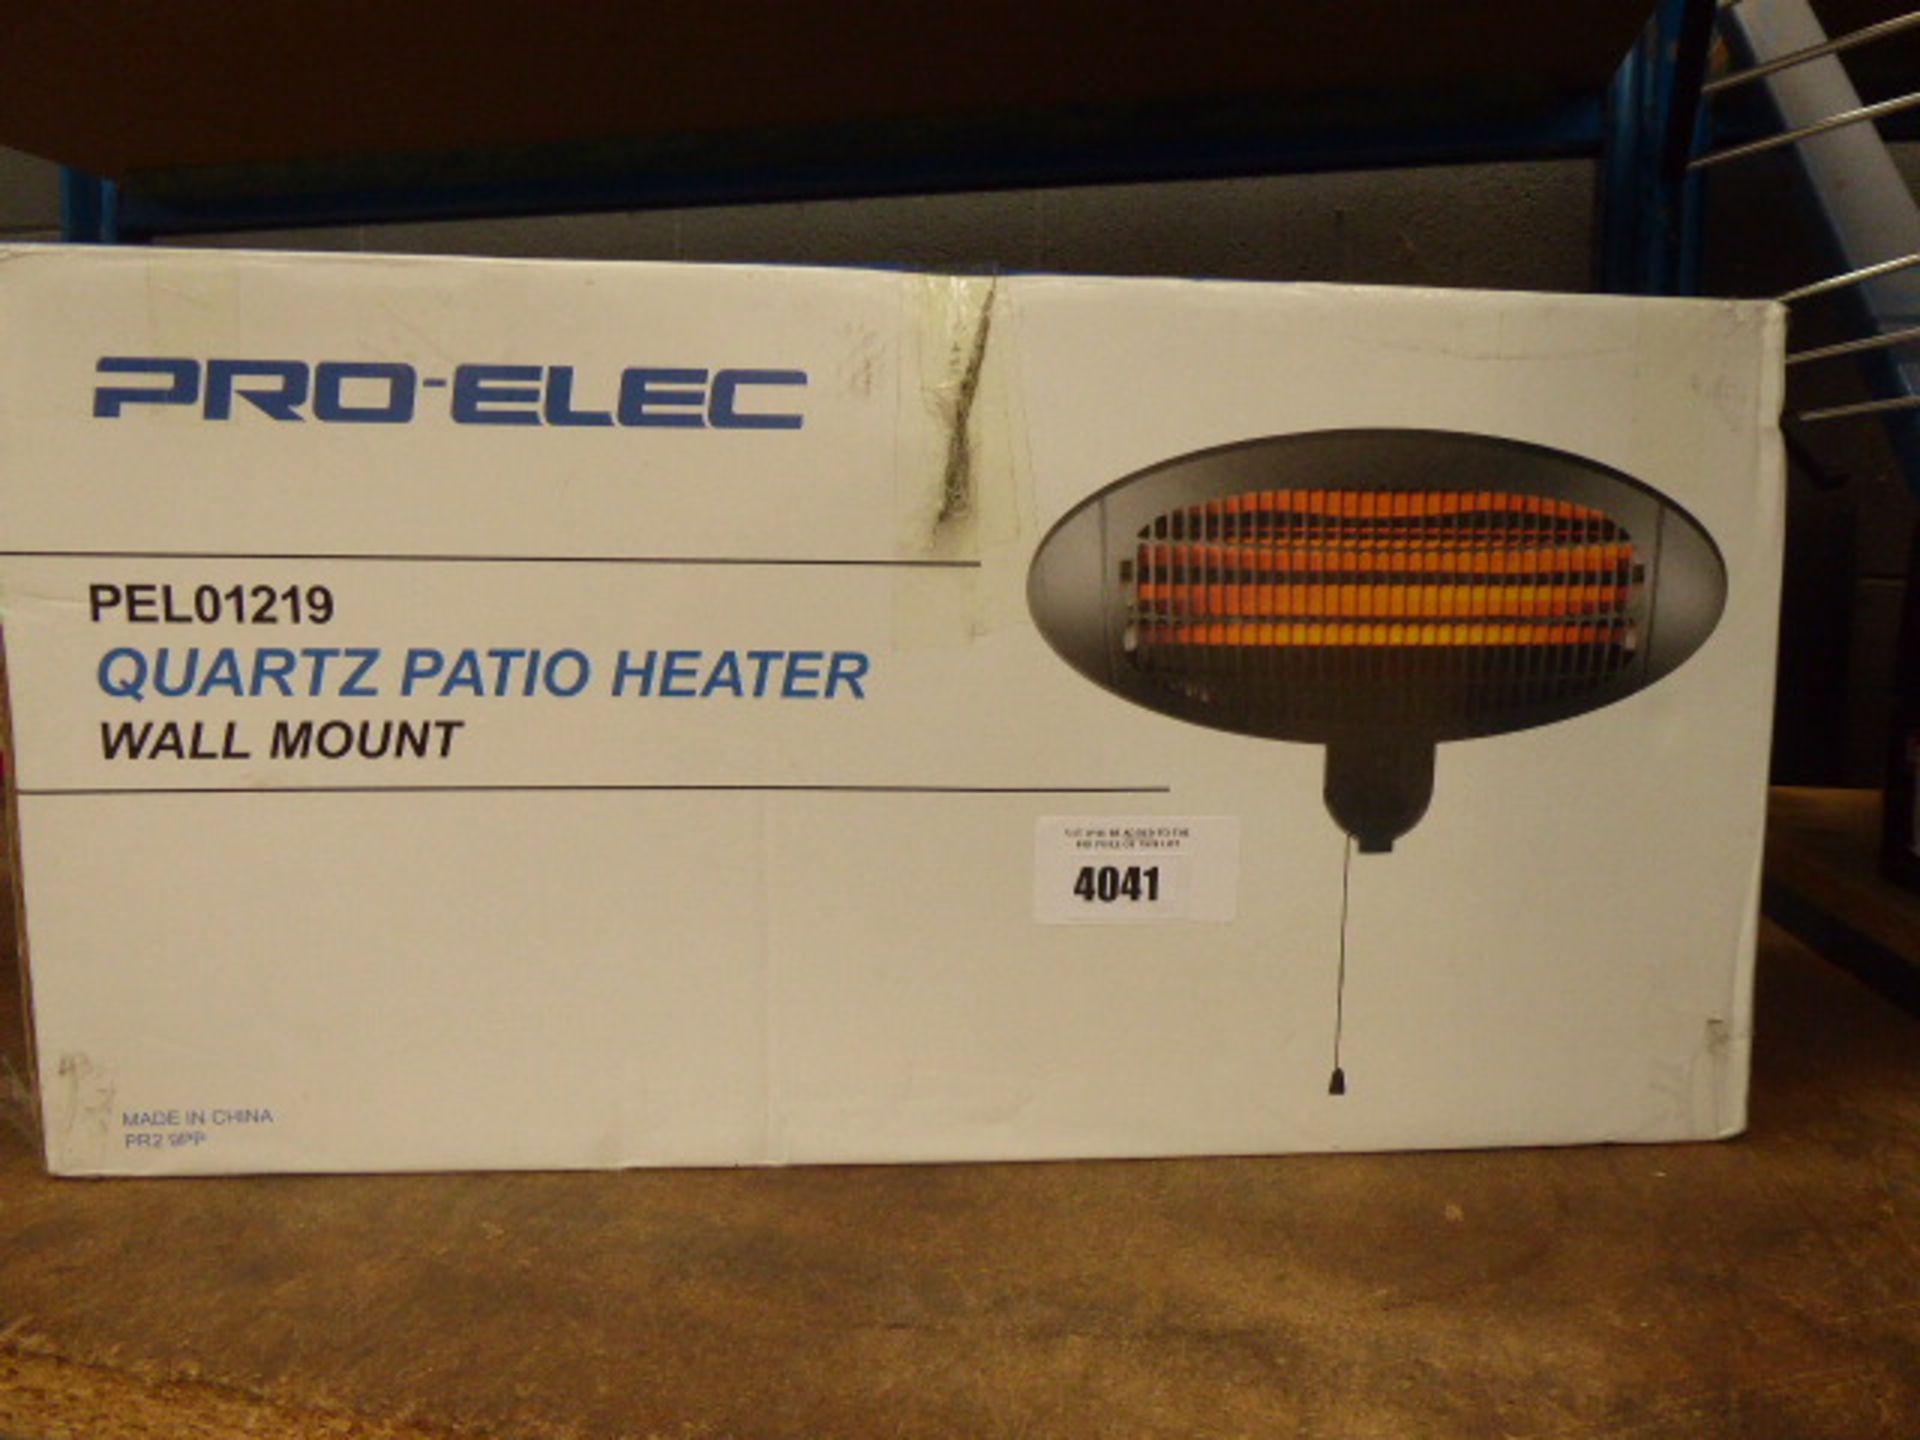 Pro elec boxed quartz patio heater